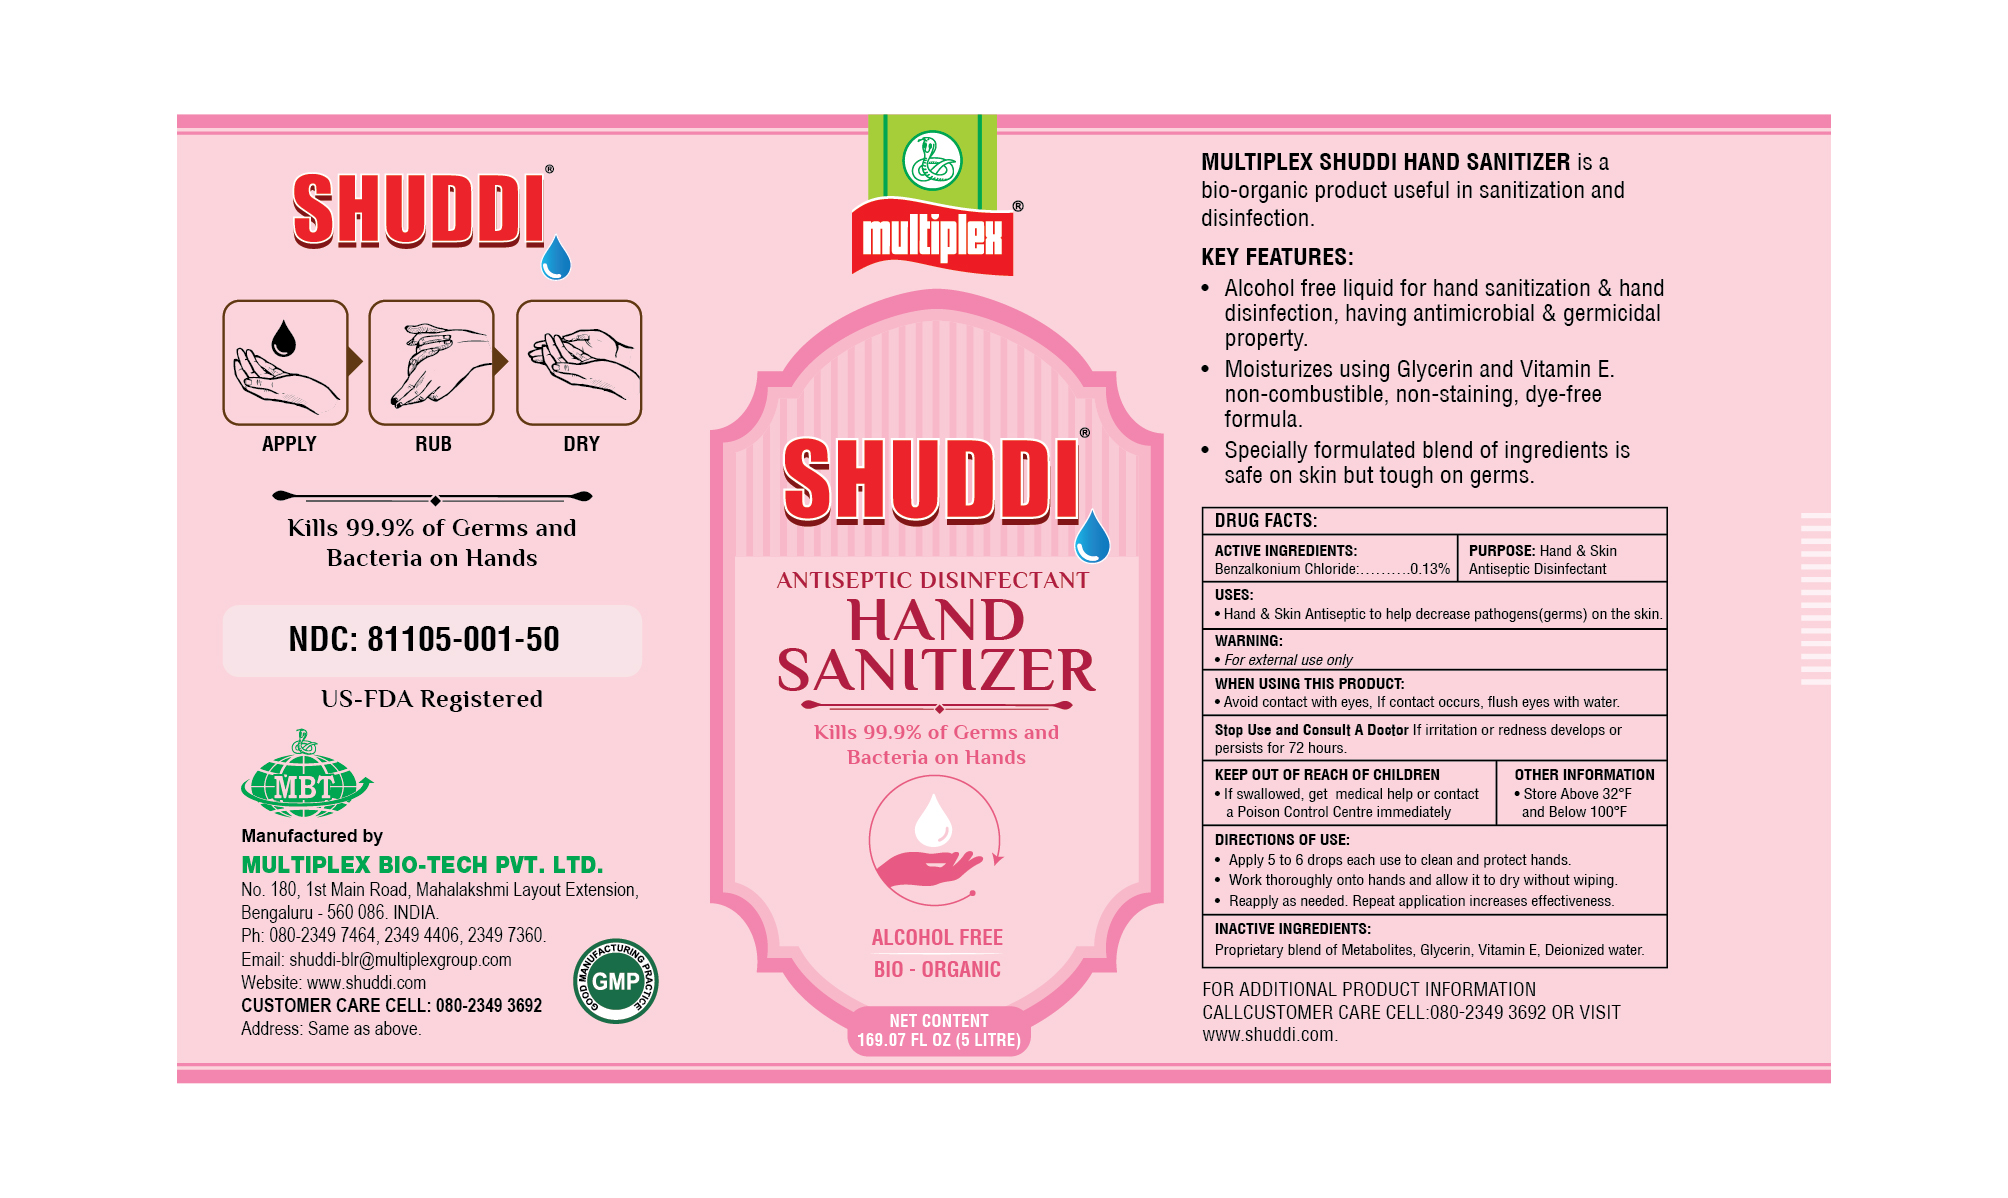 Shuddi-5 Liter